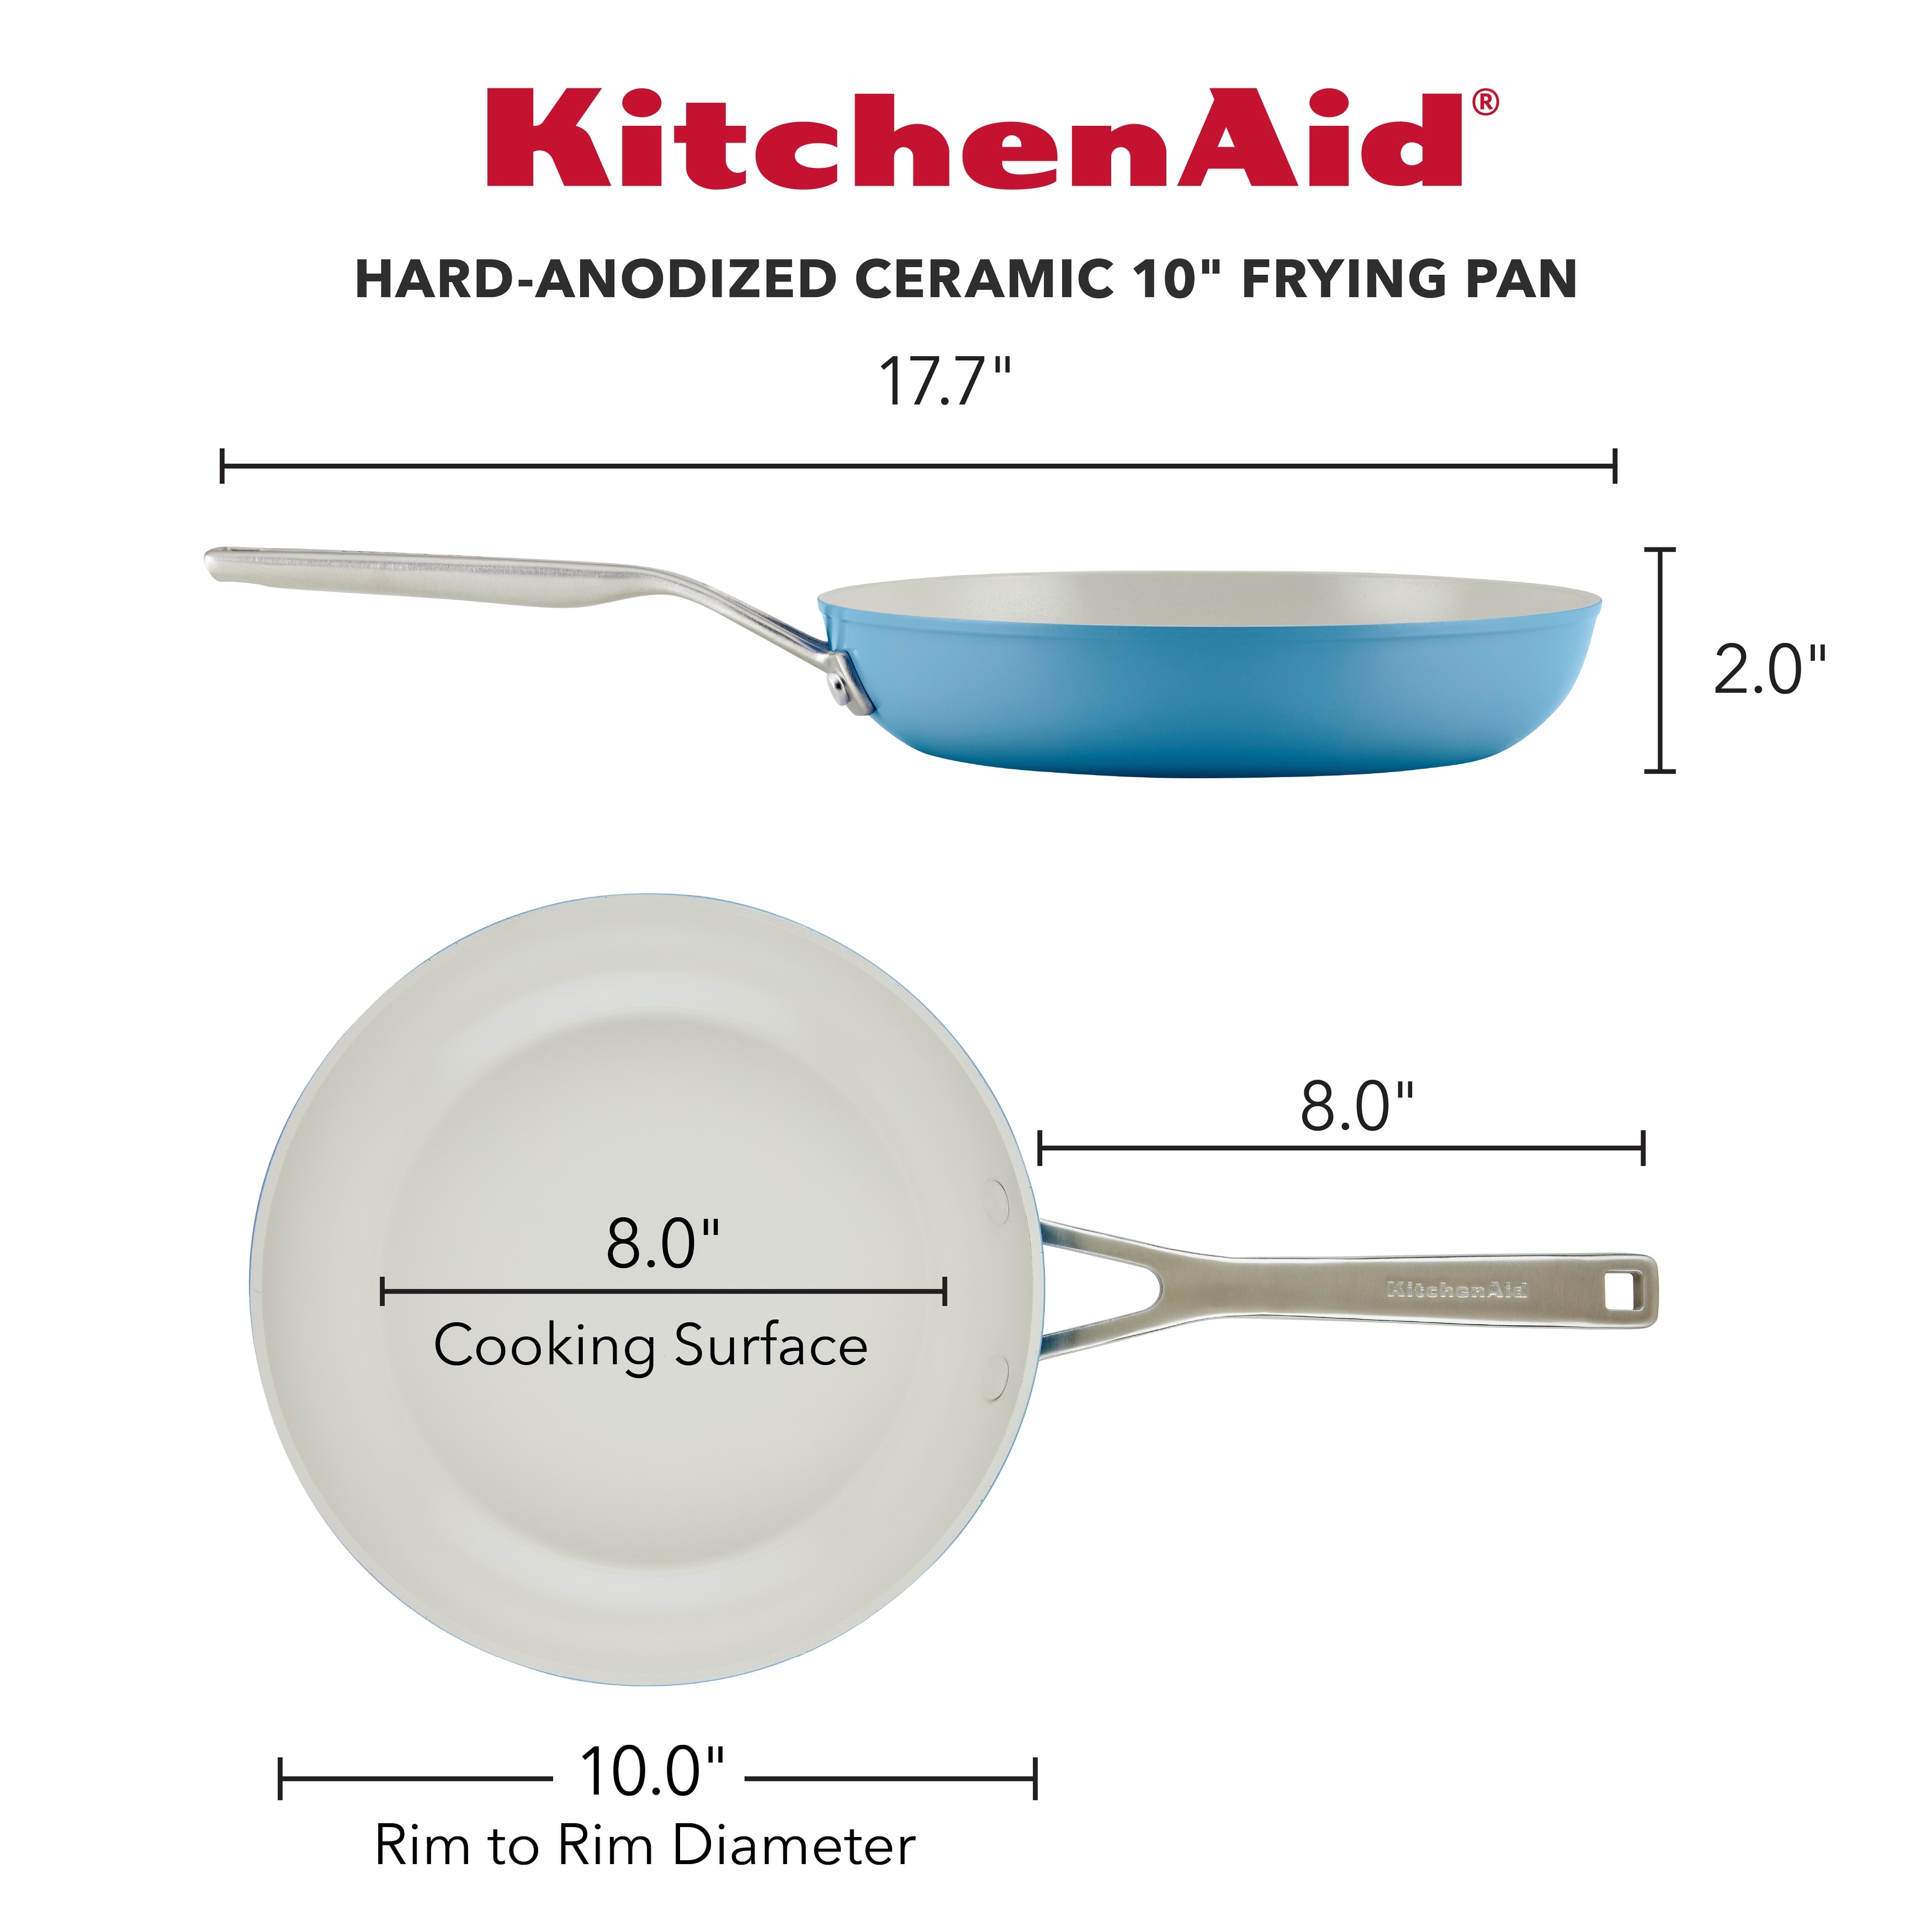 KitchenAid Ceramic 10-pc. Non-Stick Cookware Set